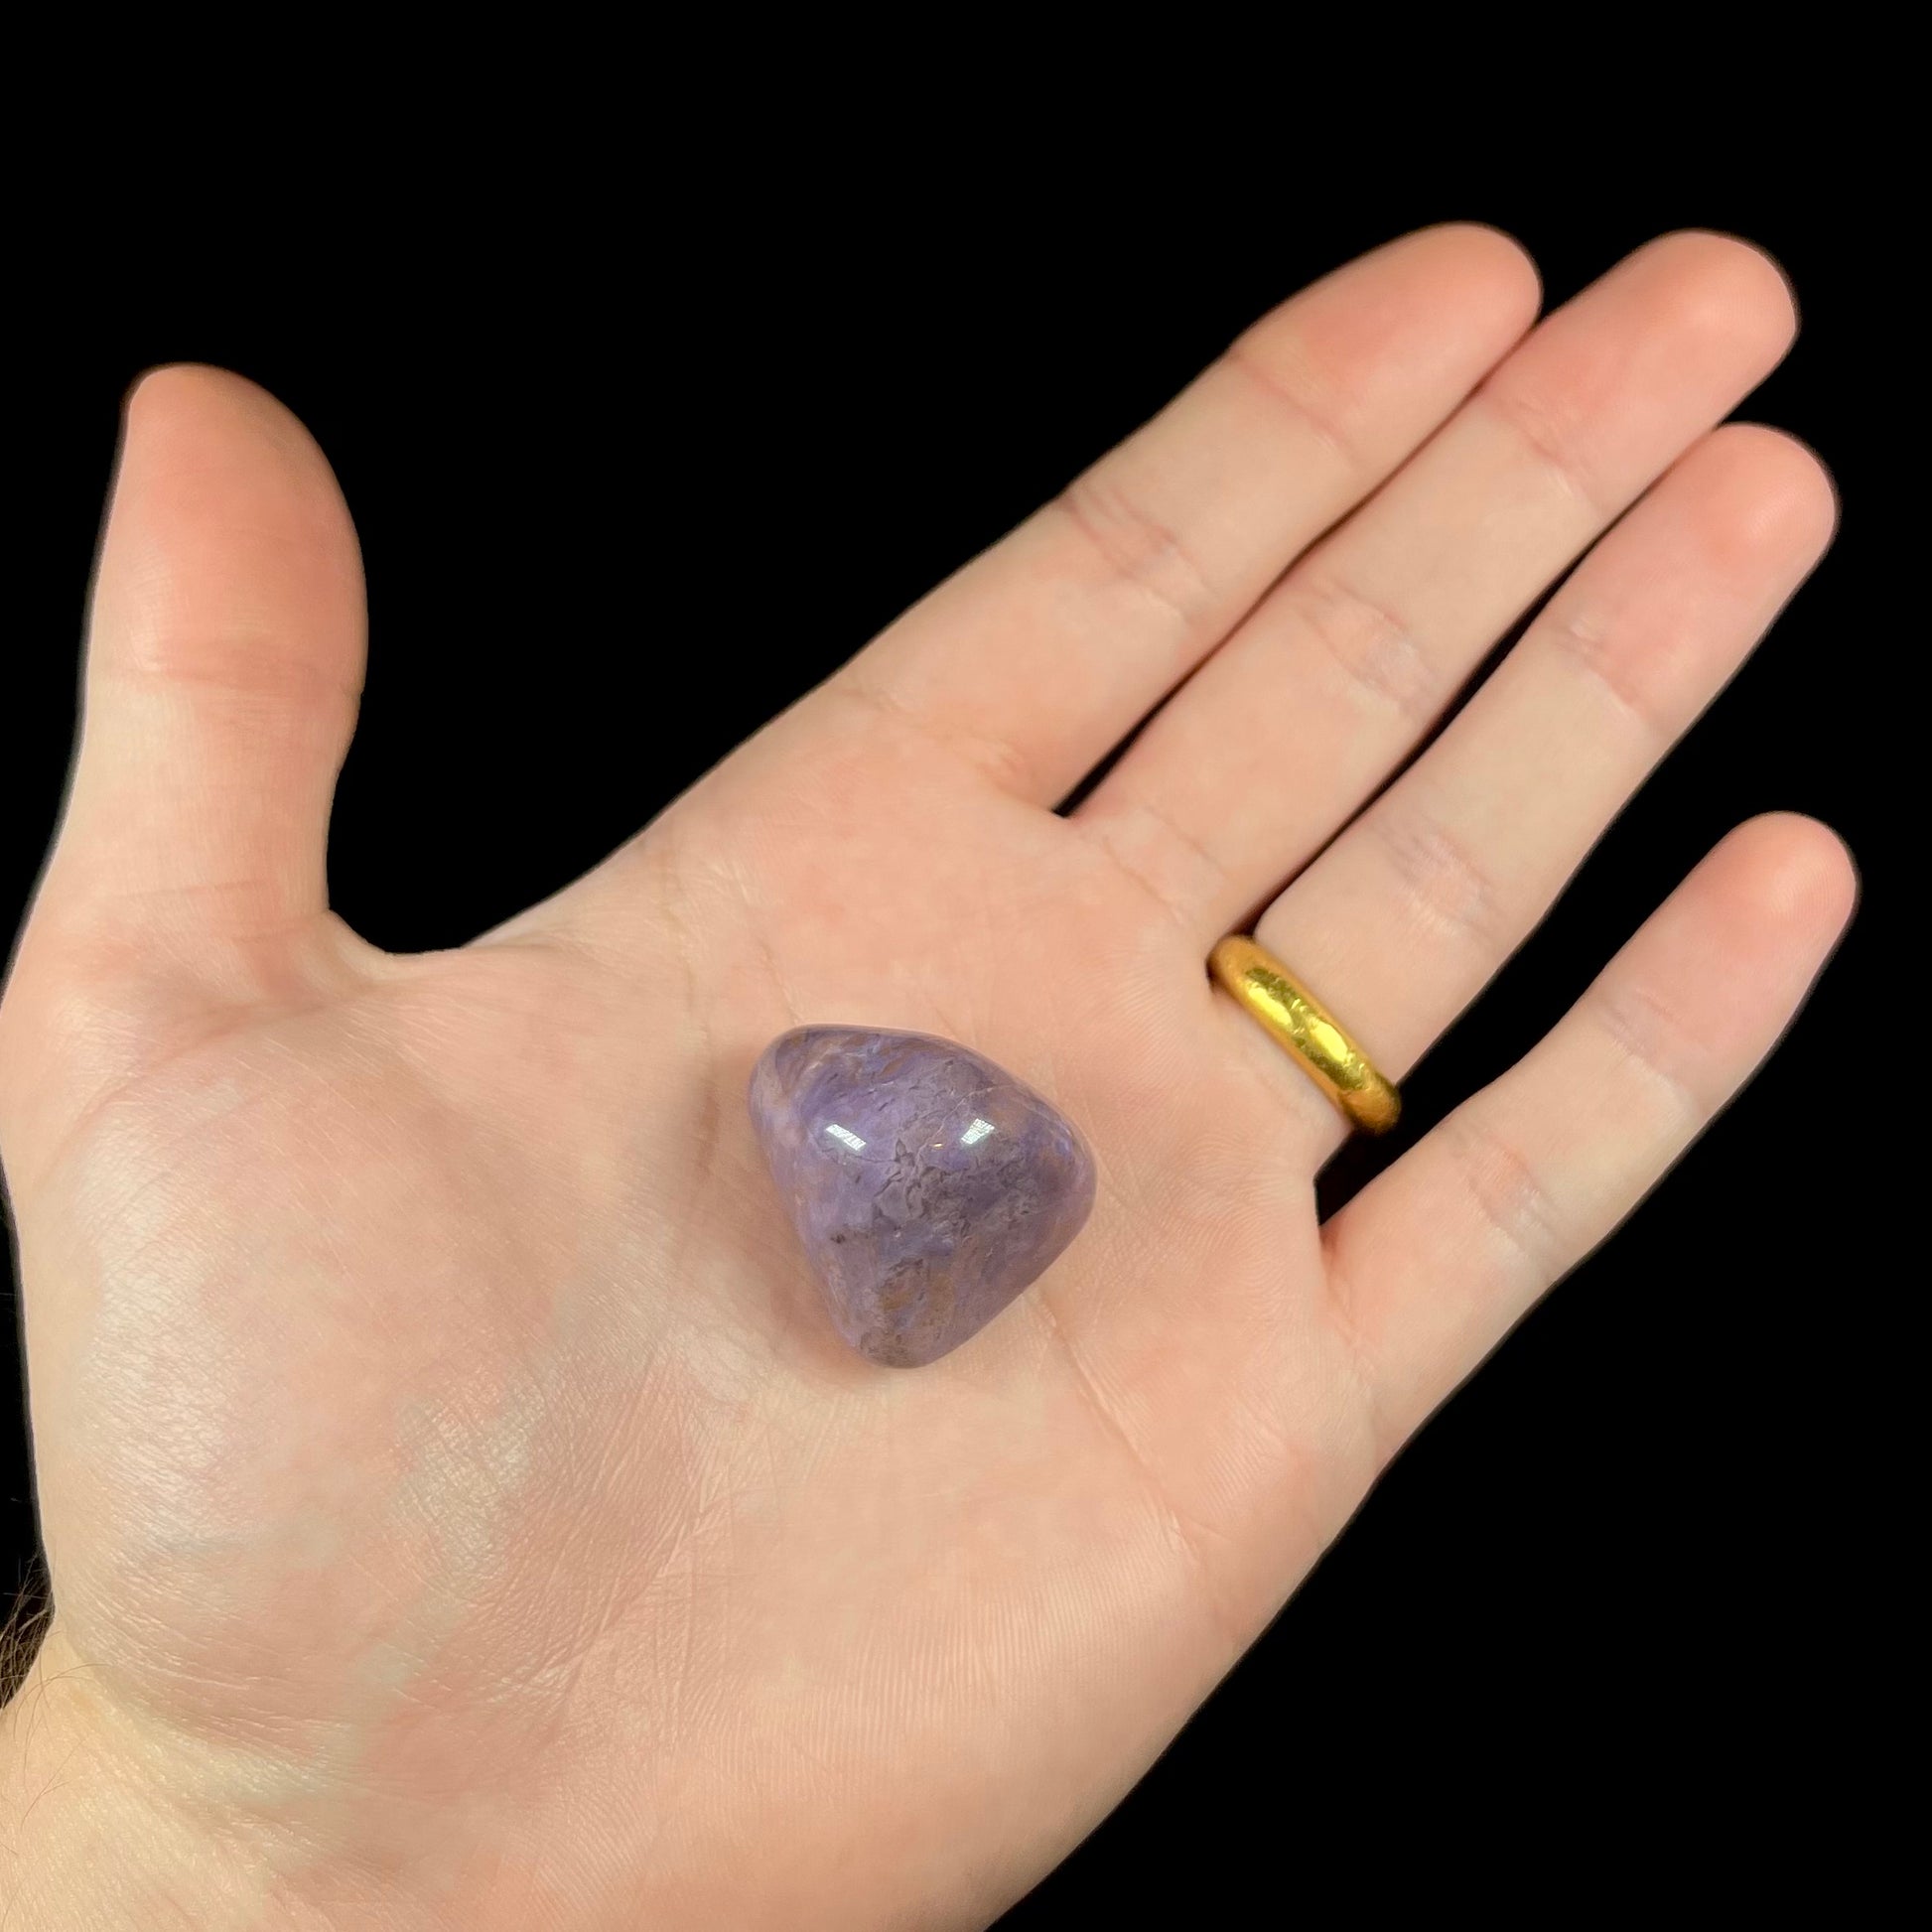 A tumbled turkiyenite stone, commonly referred to as "Turkish purple jade."